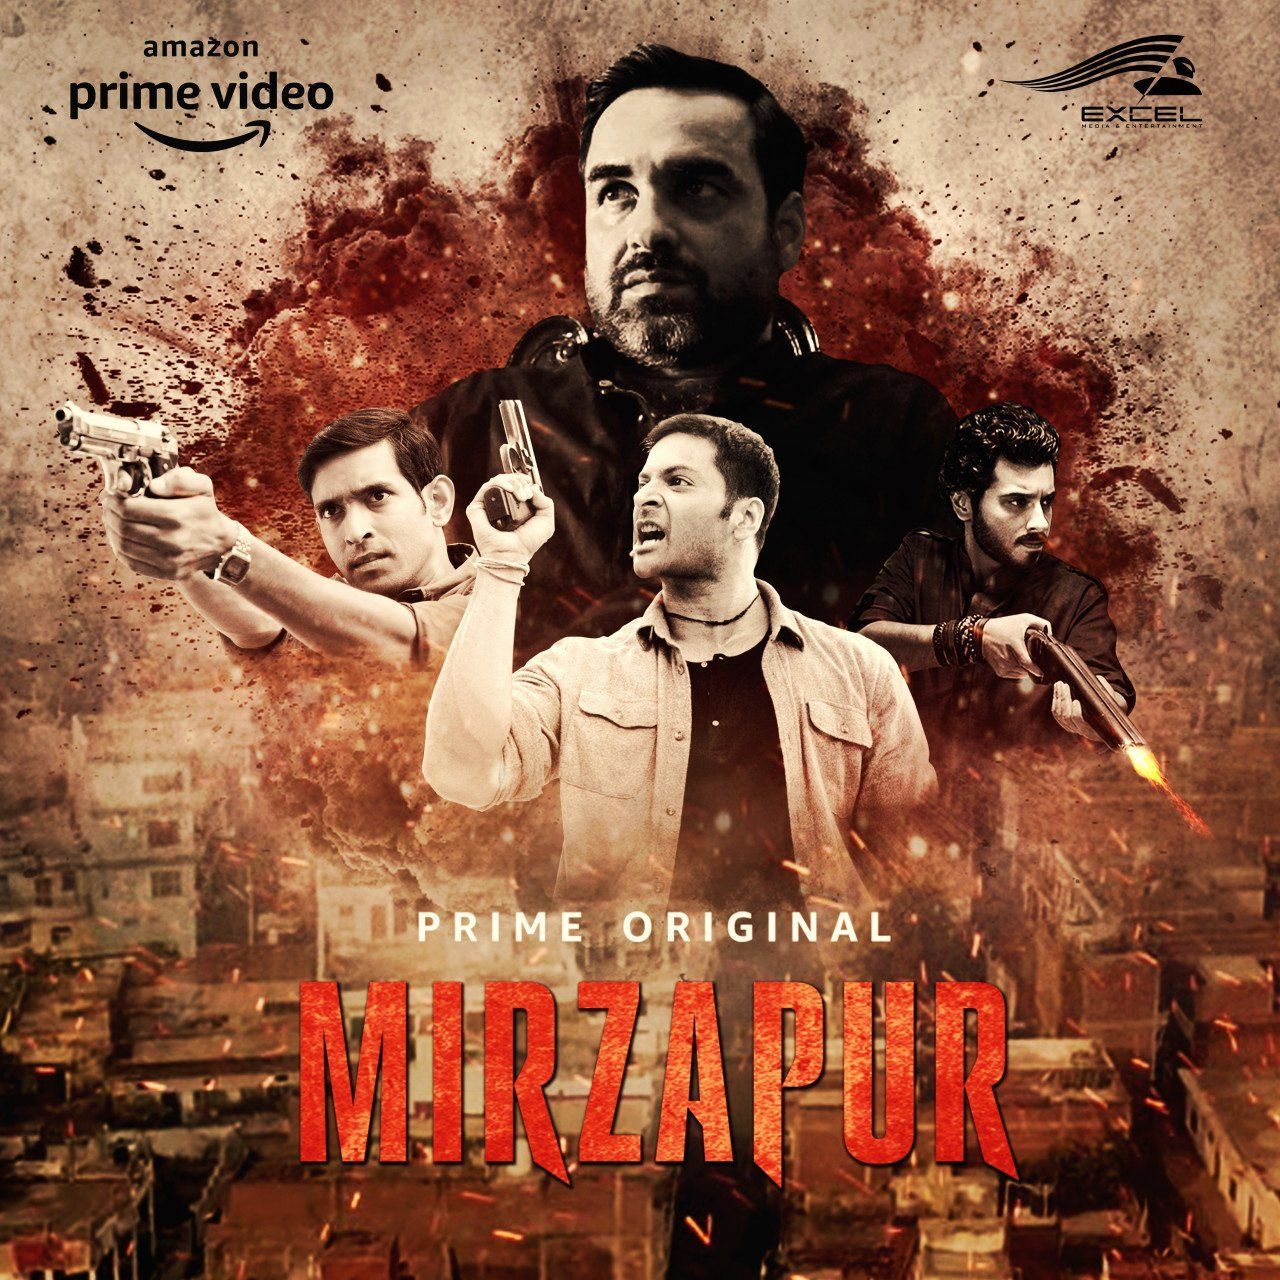 Mirzapur Season 2 Full HD Free Download 720p. Movies online free film, Watch new movies online, New movies to watch